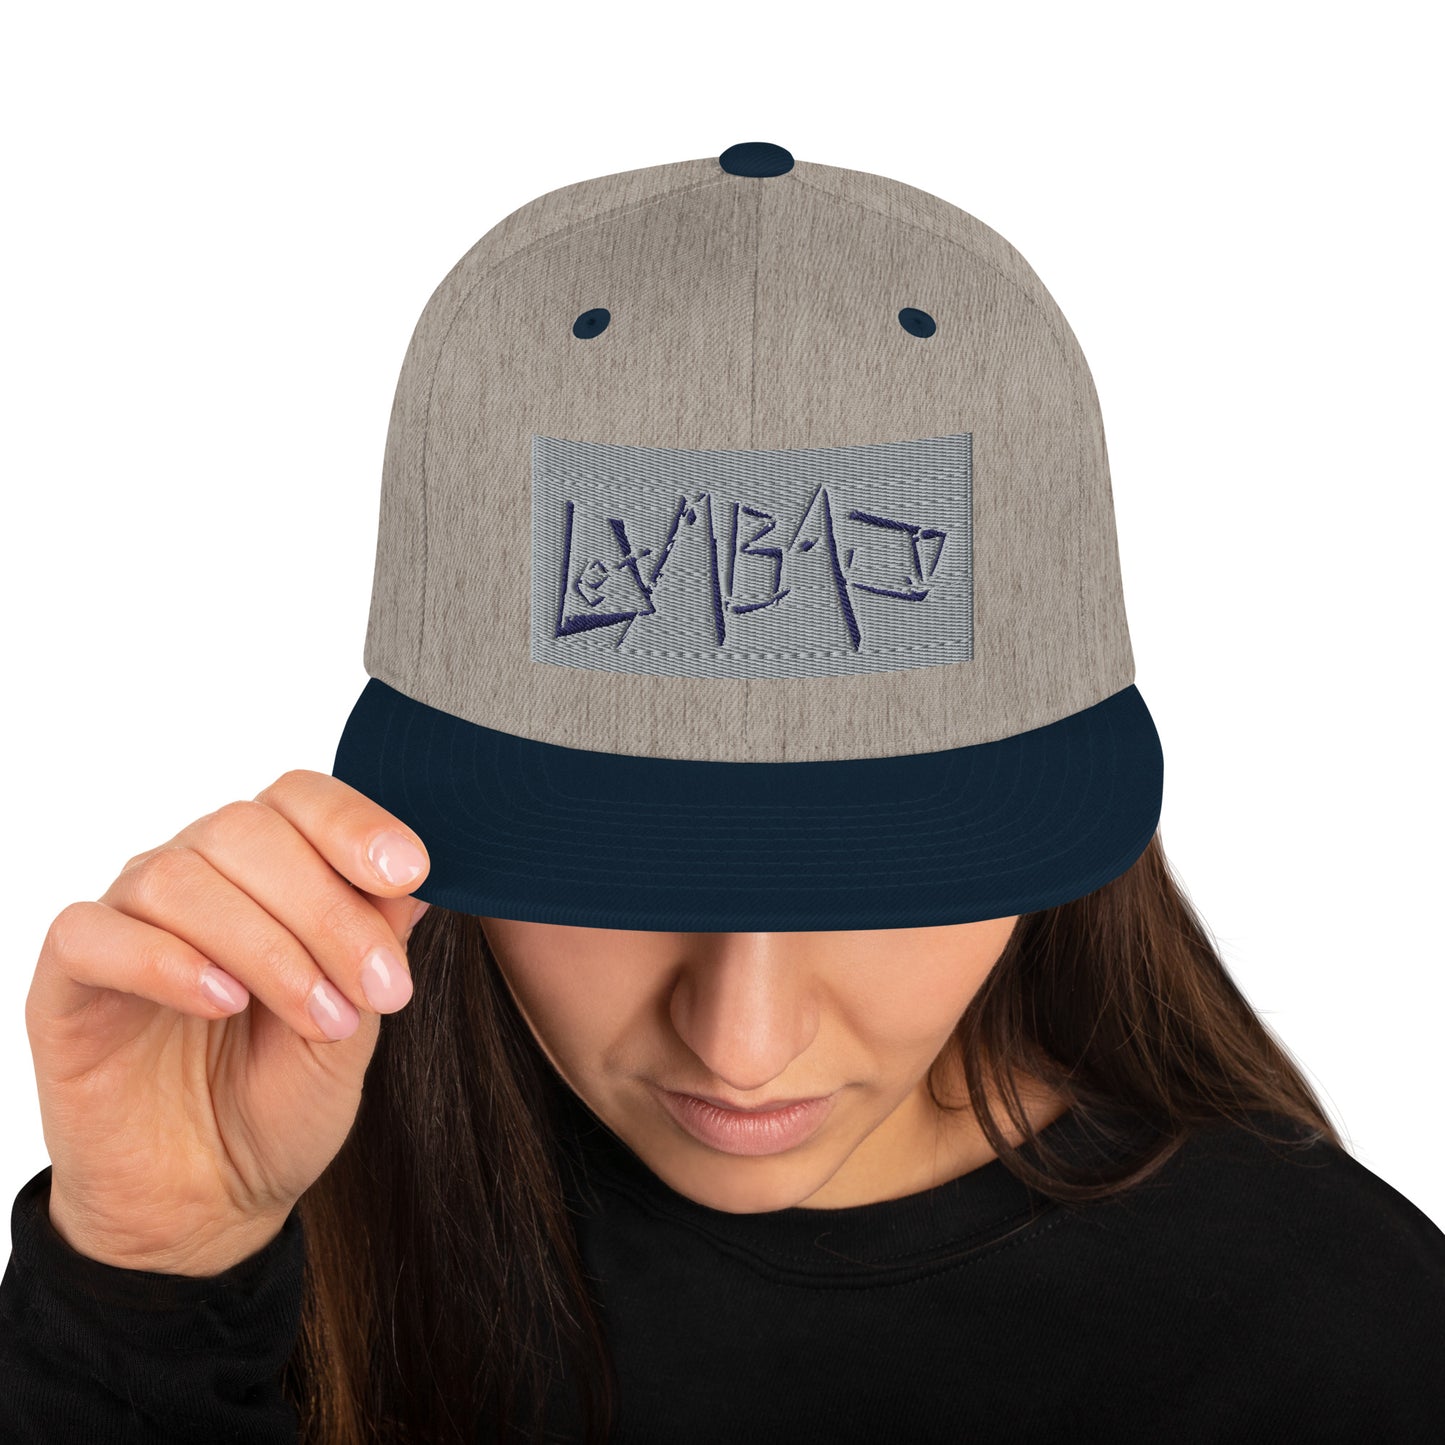 LMBAK (Let Me Be A Kid) Snapback Hat